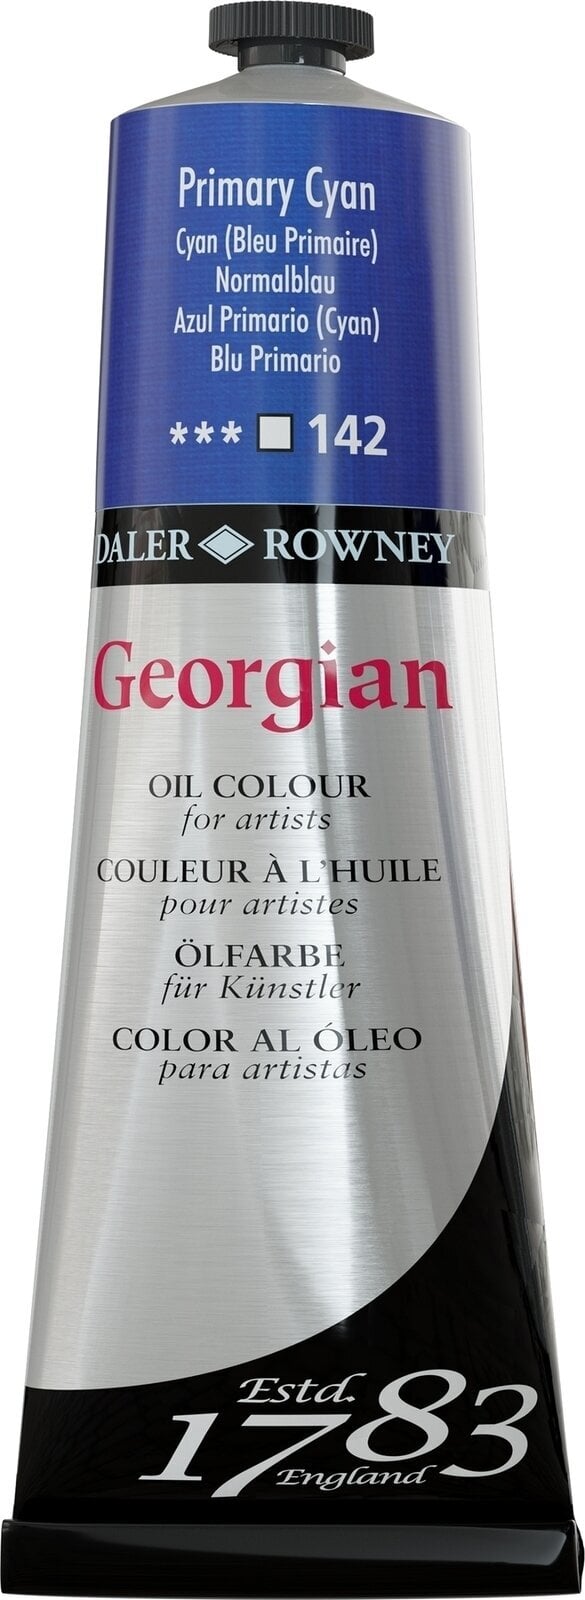 Oil colour Daler Rowney Georgian Oil Paint Primary Cyan 225 ml 1 pc